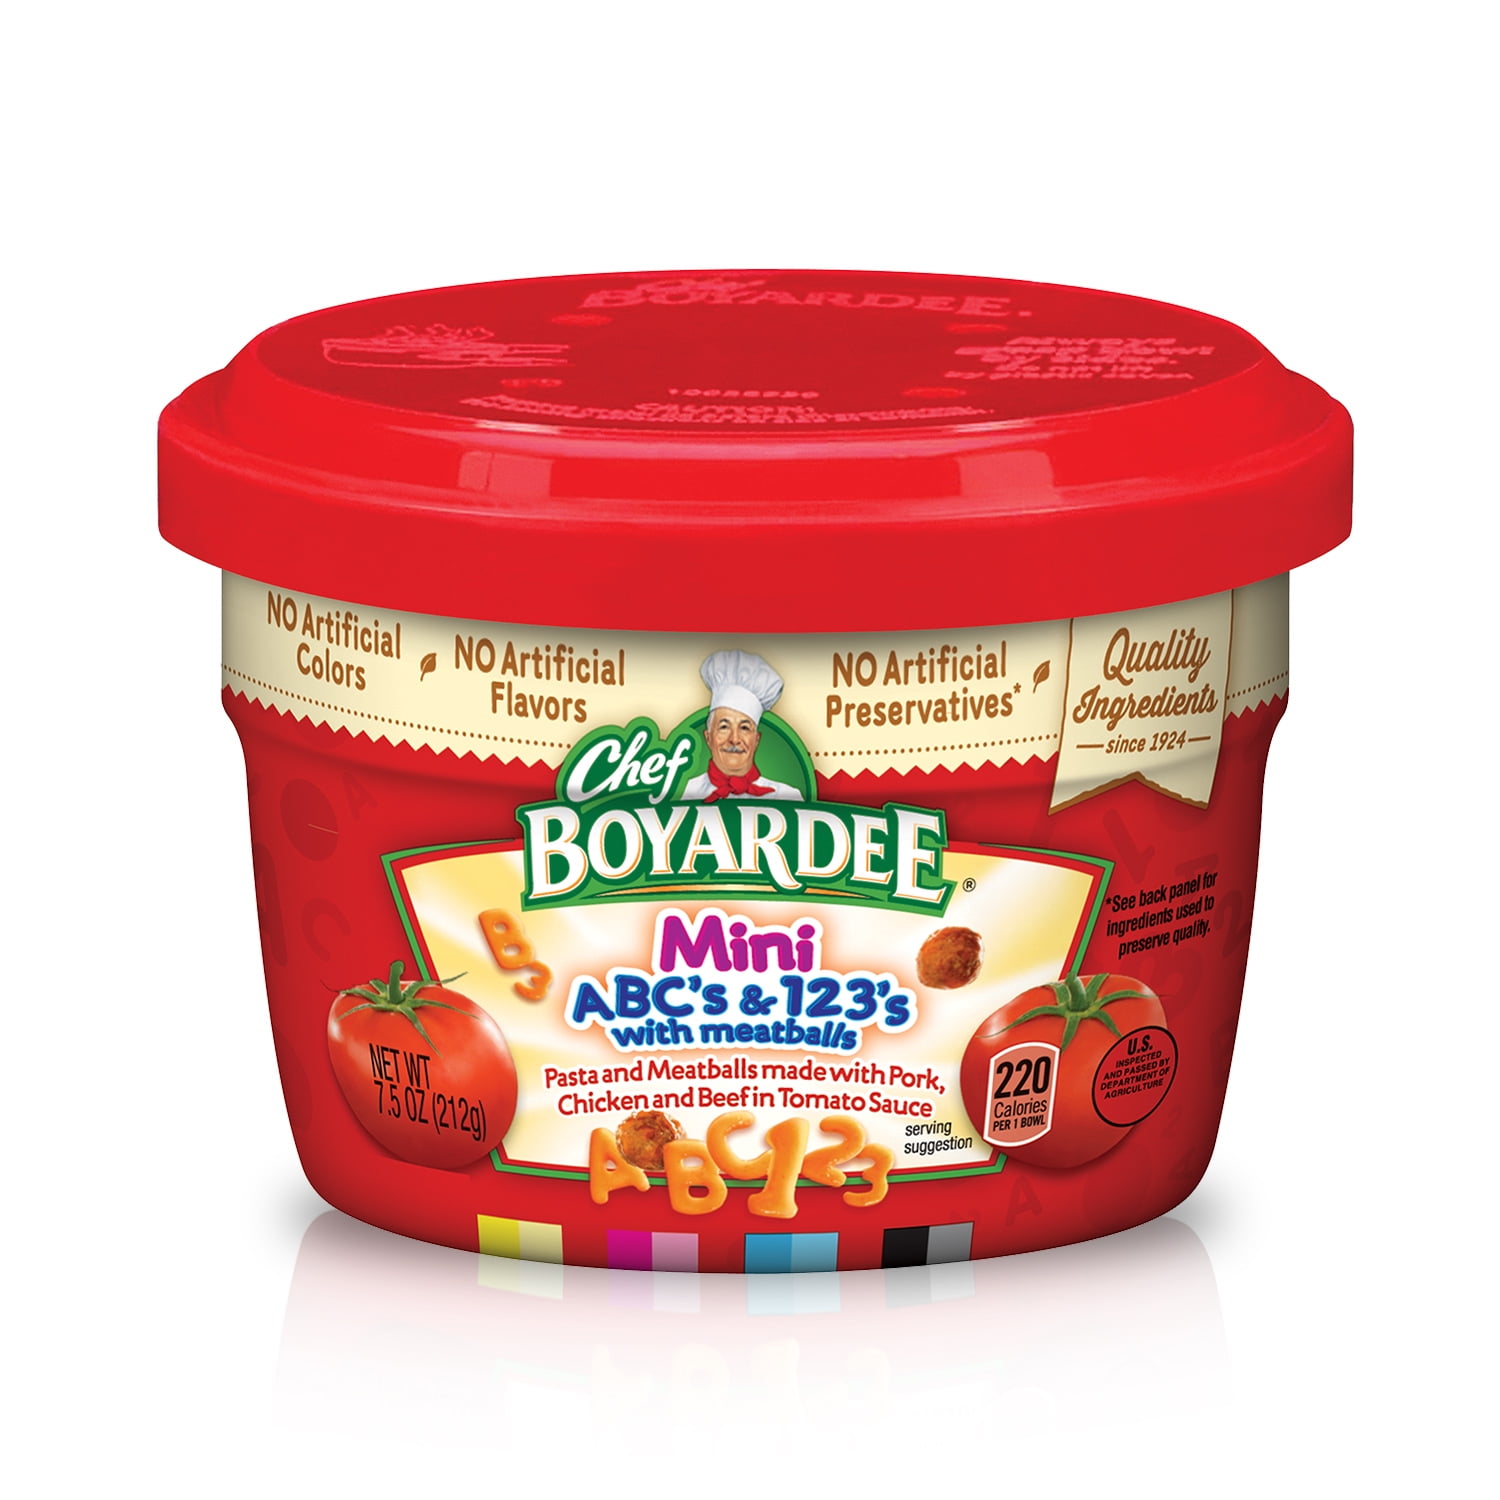 Chef Boyardee Mini-Bites ABC's & 123's Pasta with Meatballs, 7.5 oz